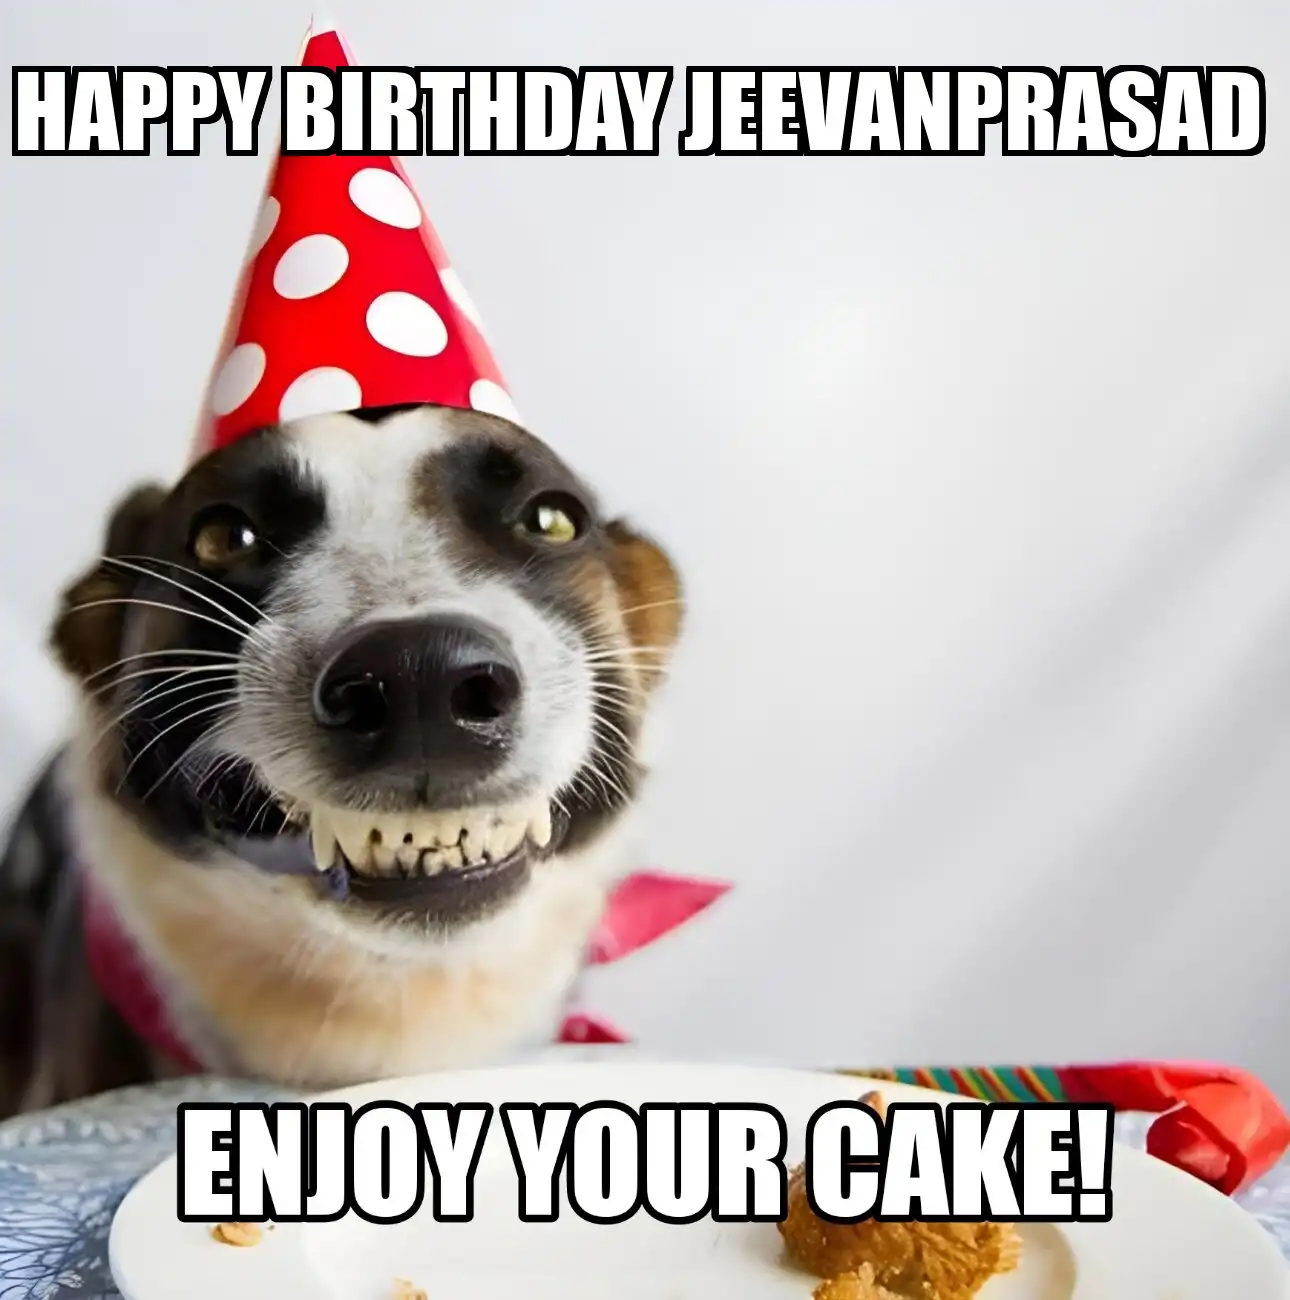 Happy Birthday Jeevanprasad Enjoy Your Cake Dog Meme